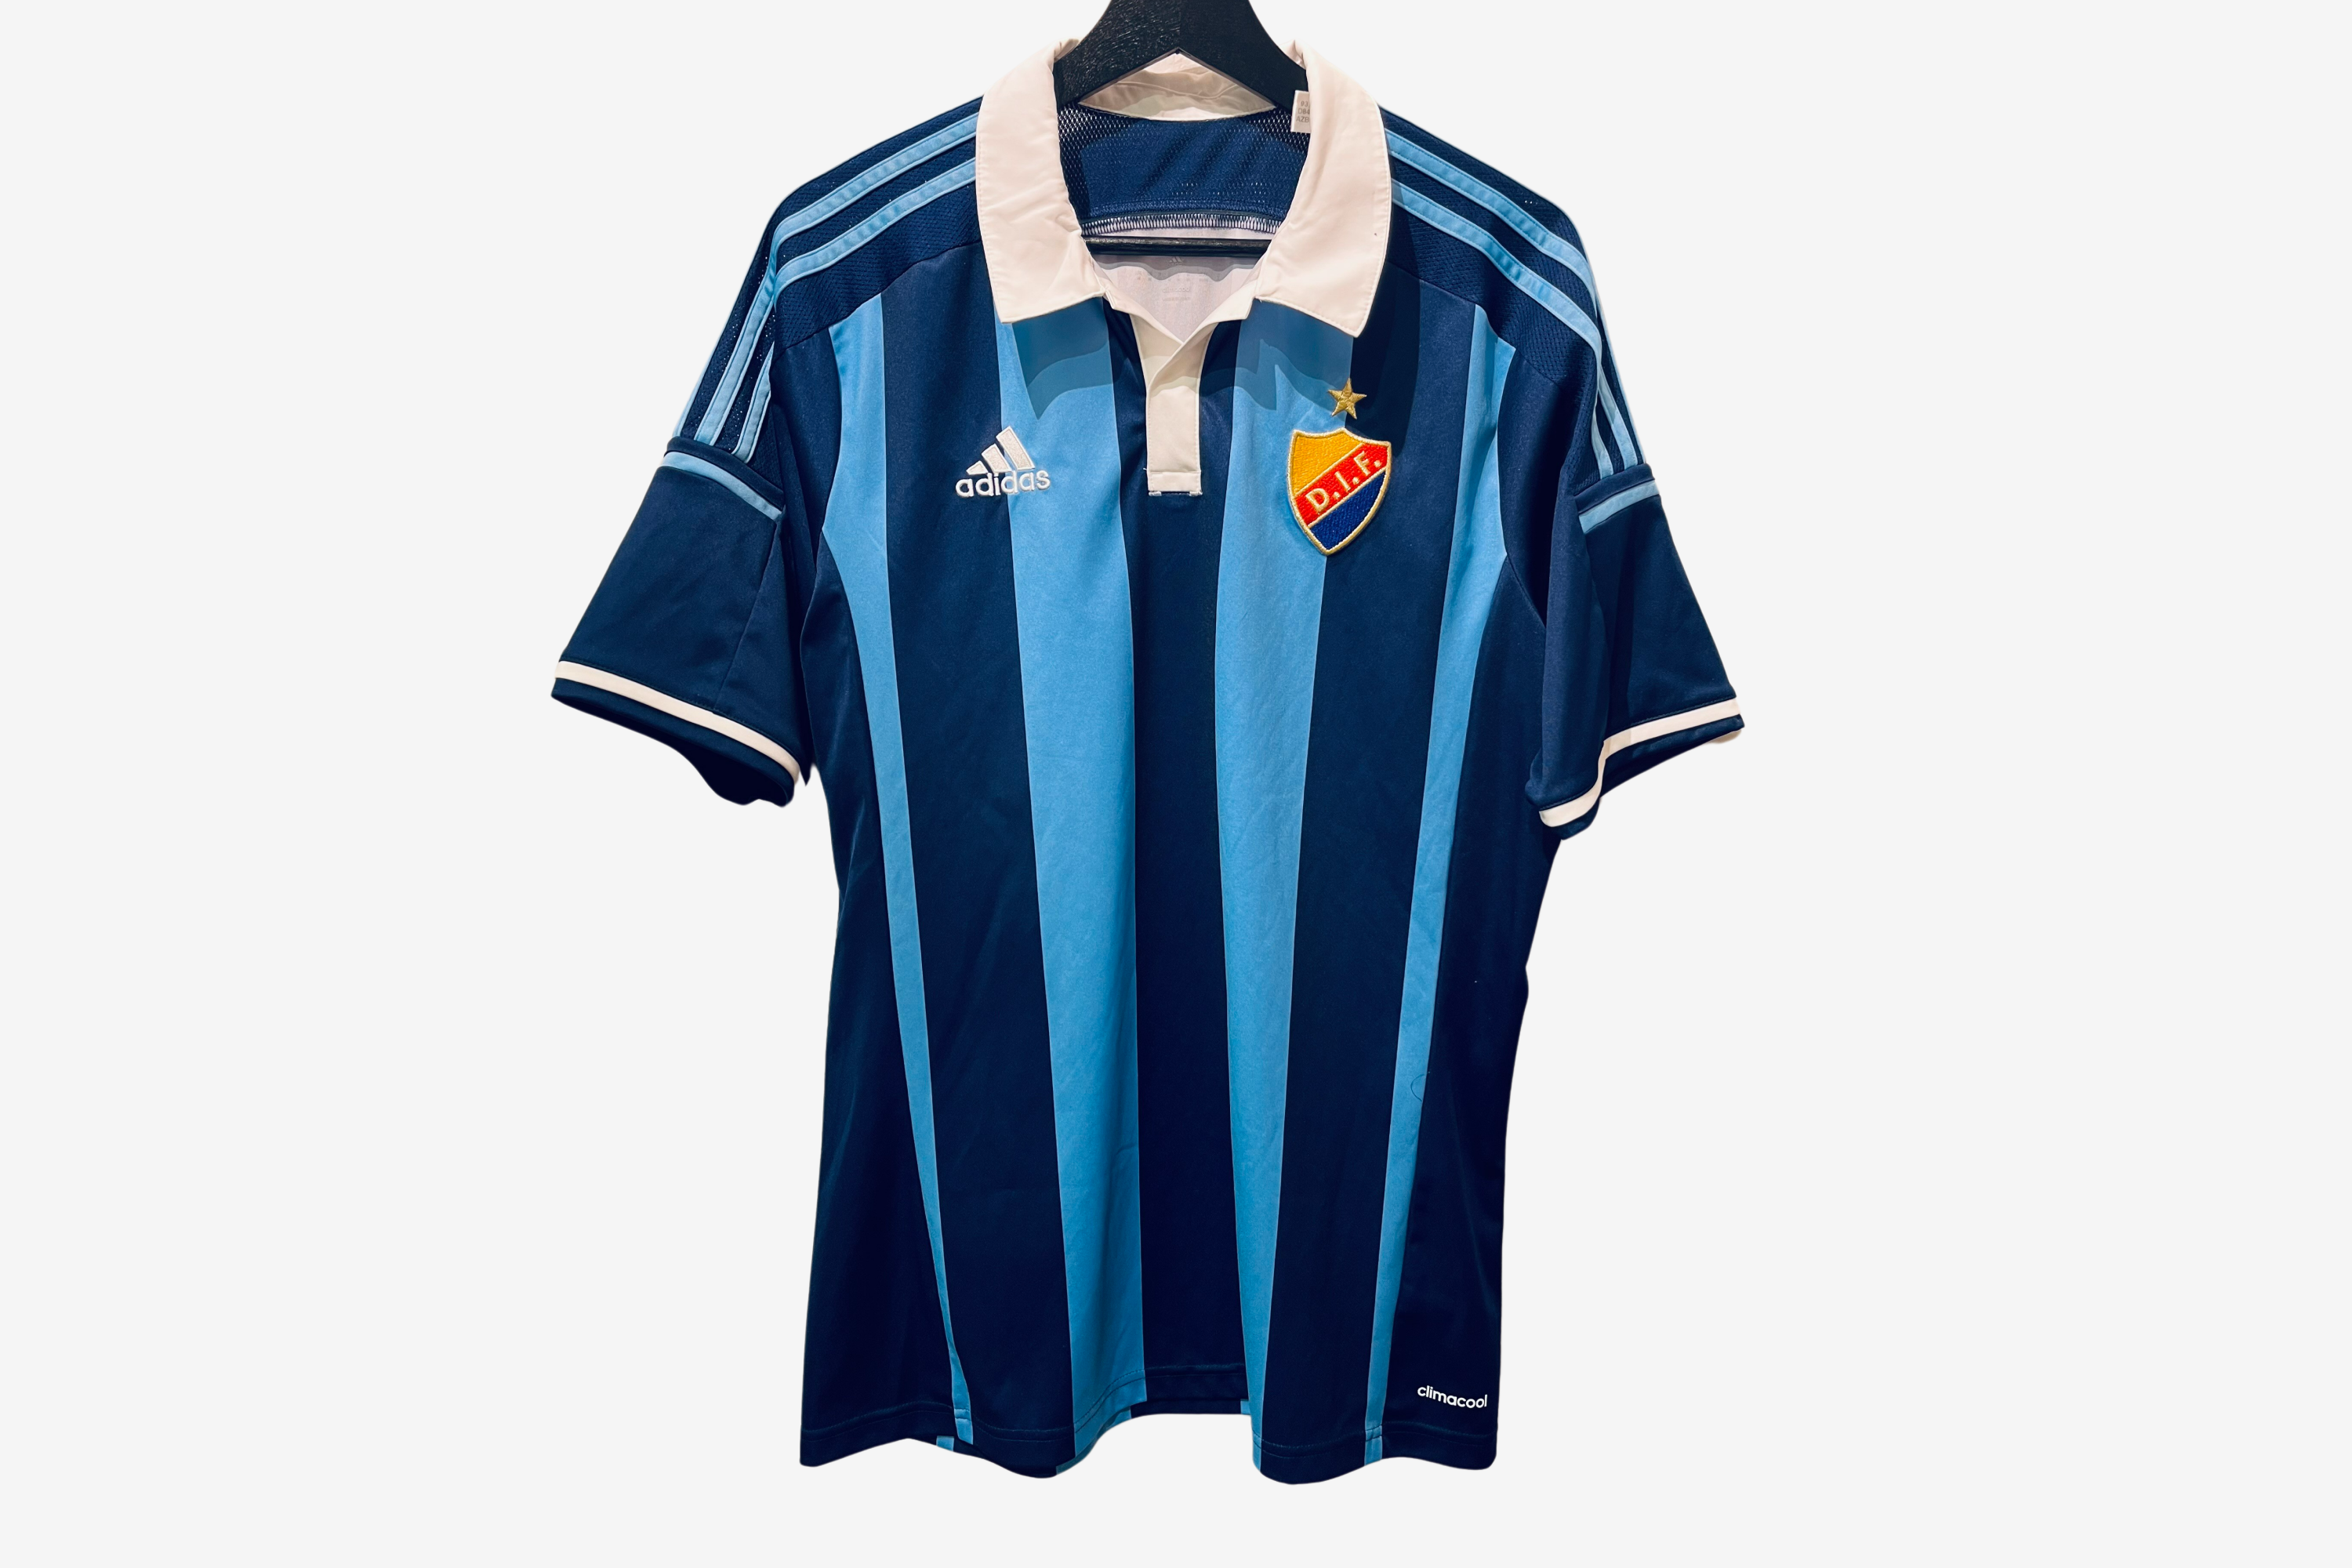 Adidas - Djurgårdens IF 2014/15 Home Football Shirt